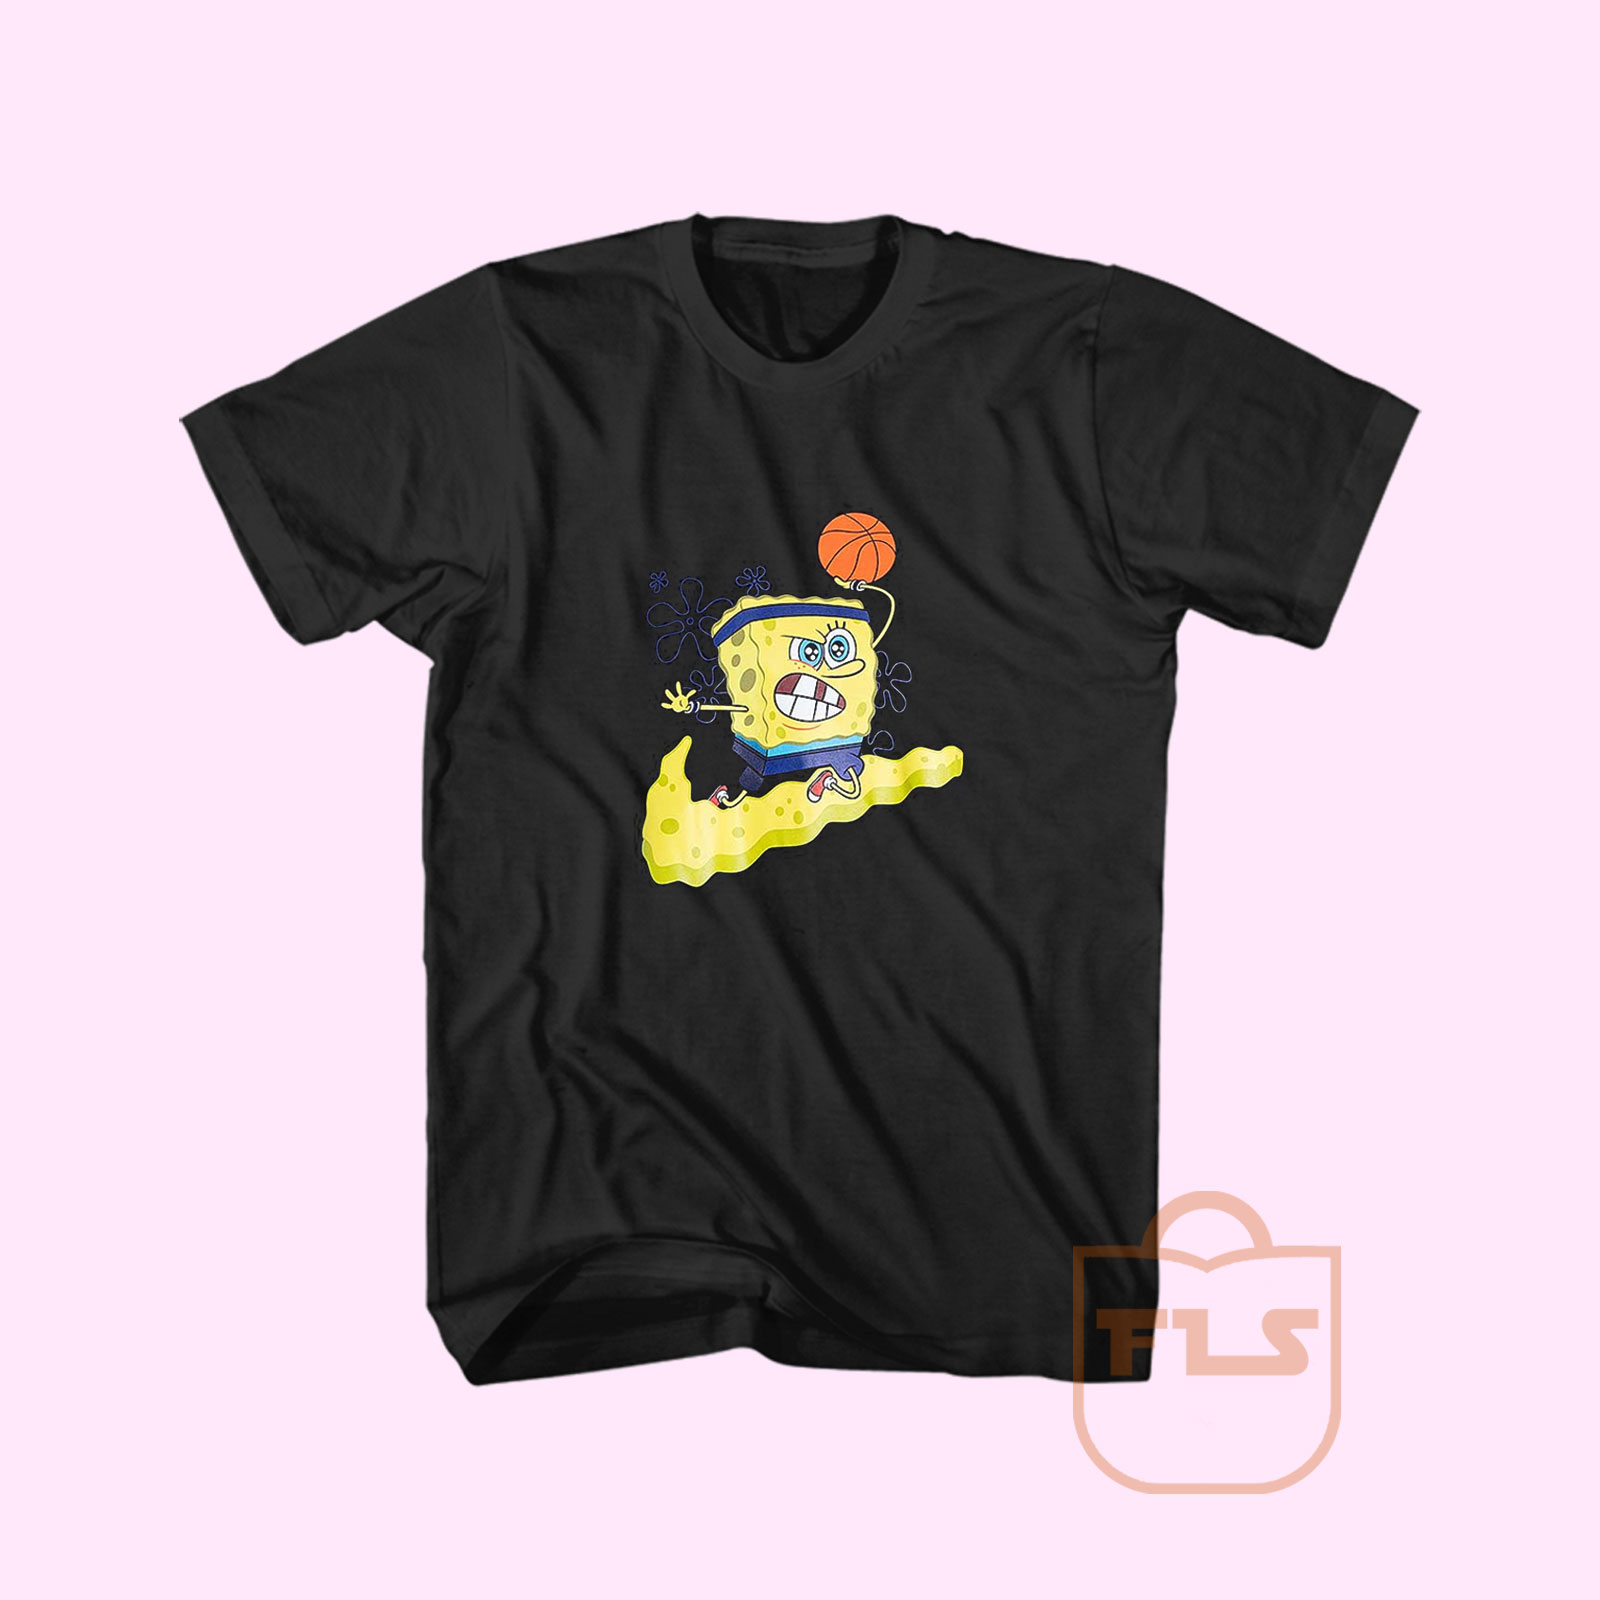 kyrie x spongebob shirt